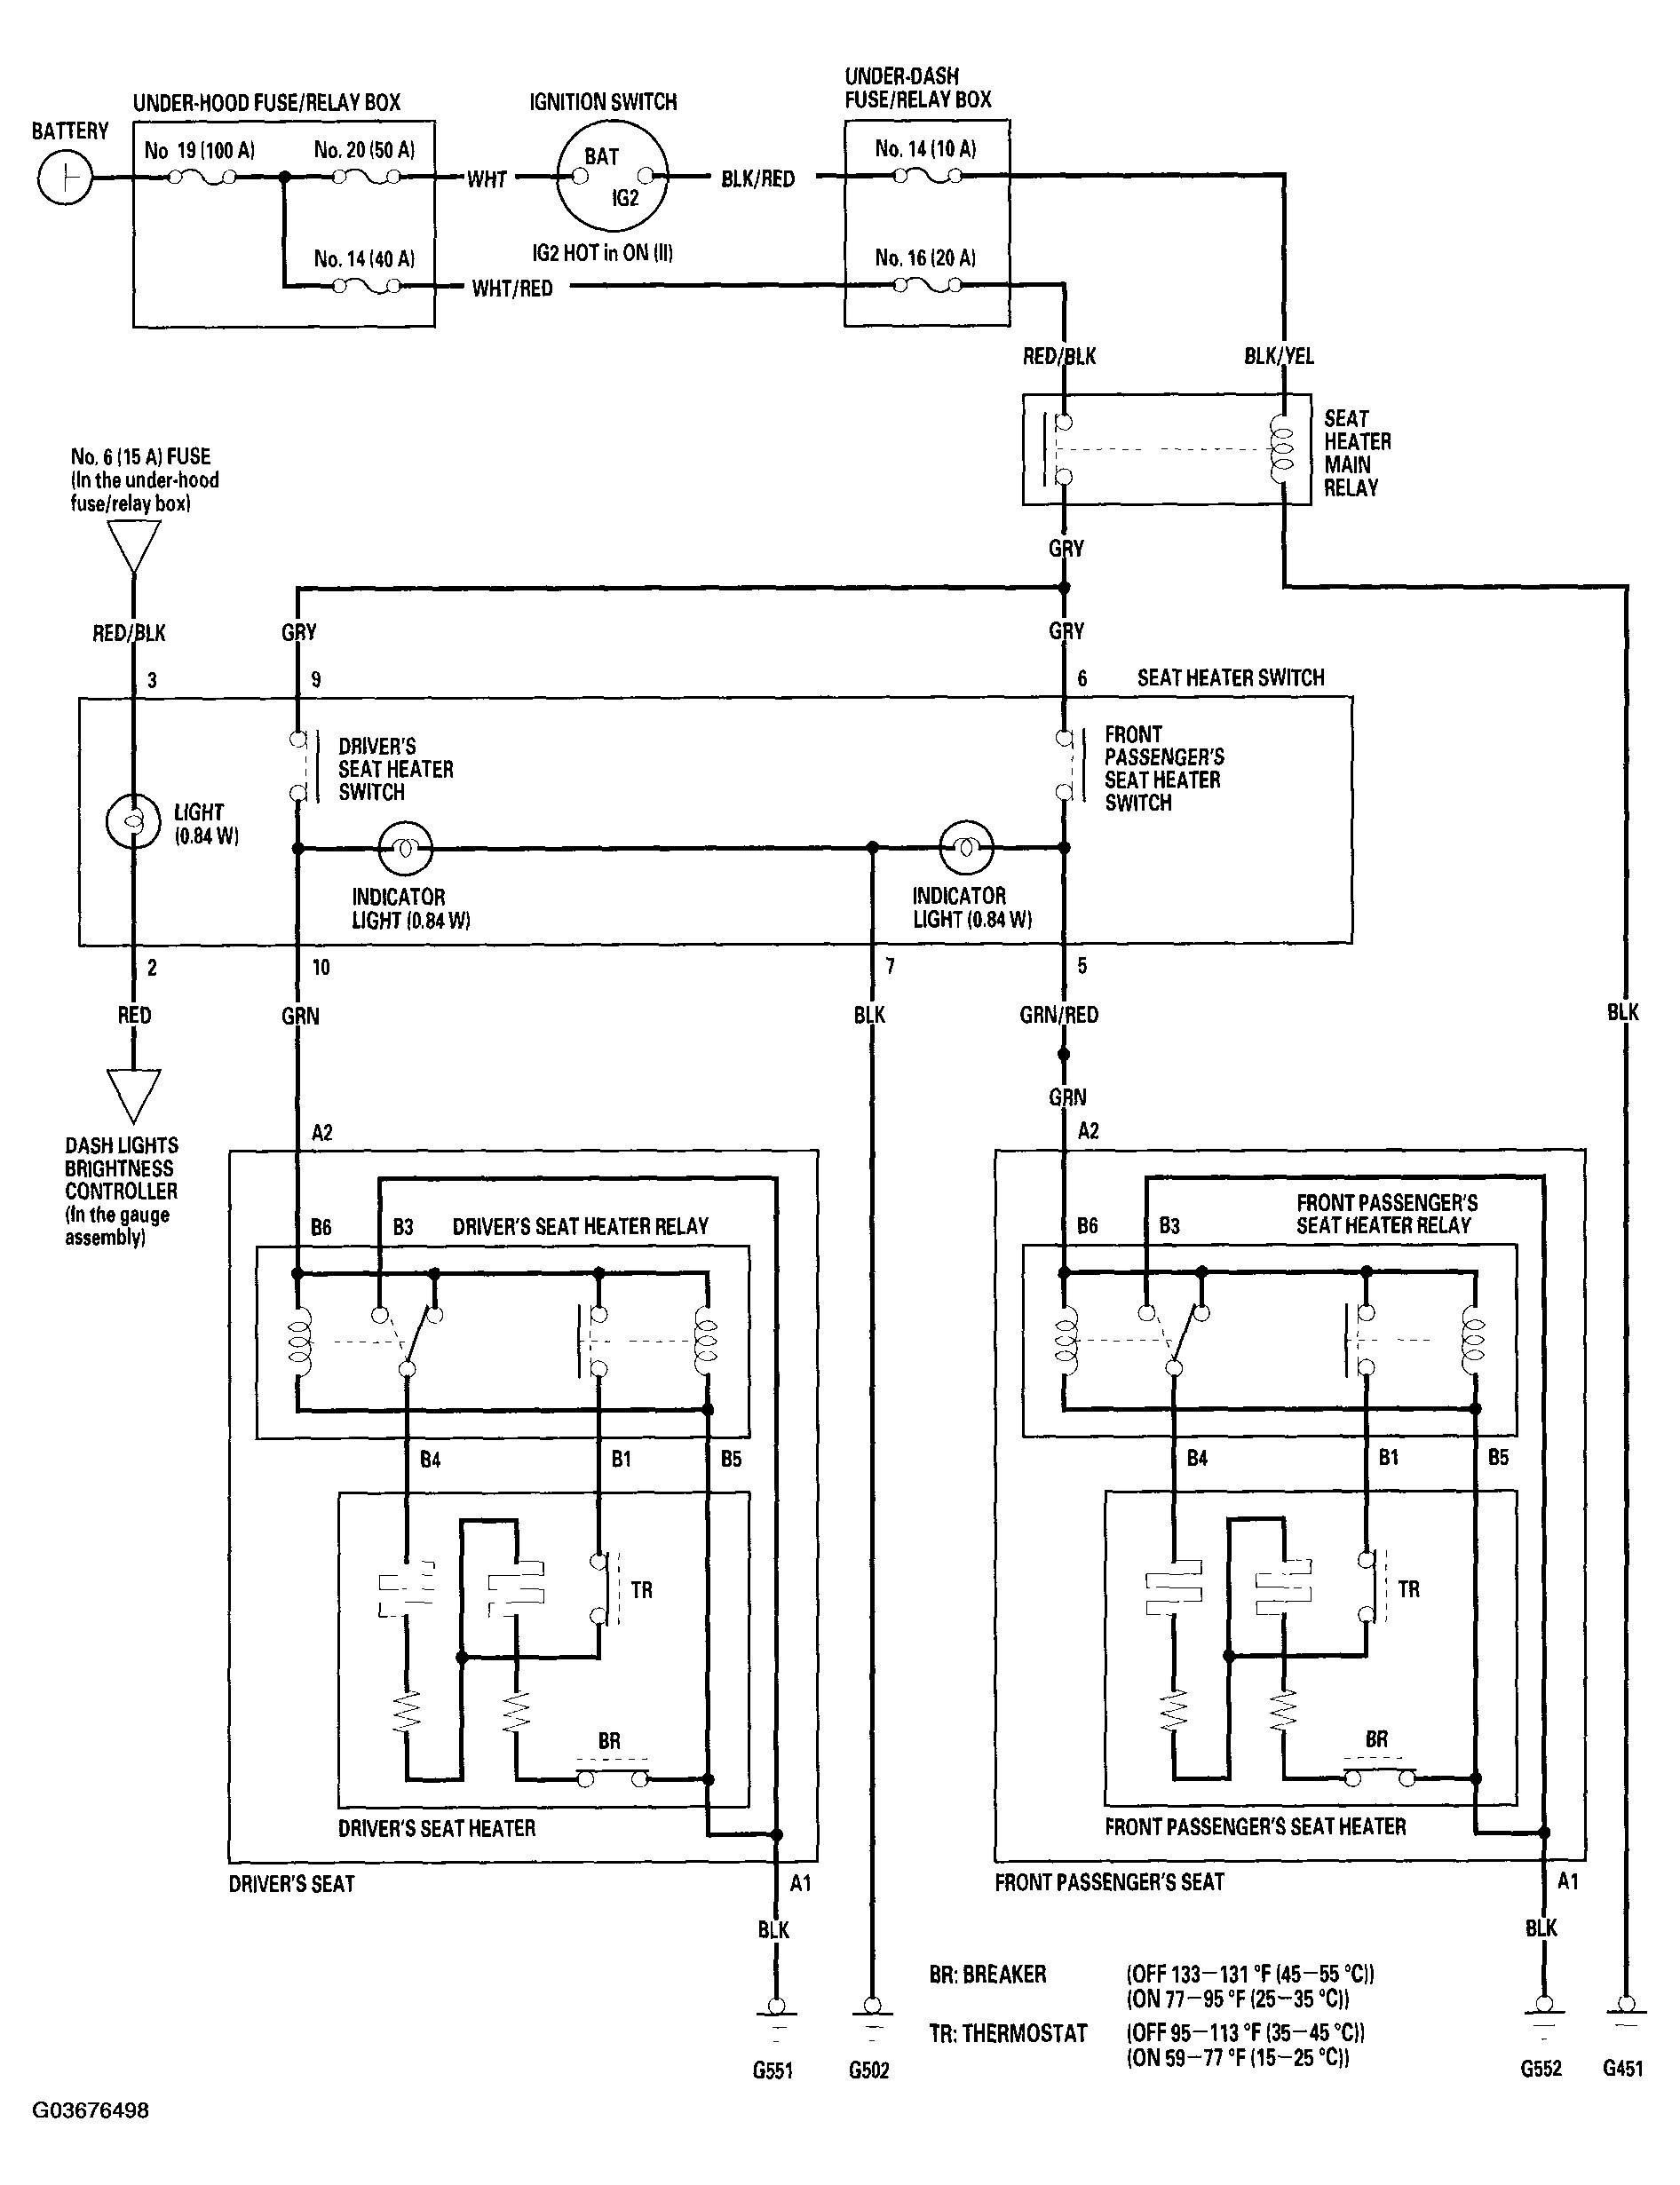 2001 Mazda B3000 Fuse Box Diagram - Wiring Diagram Schemas